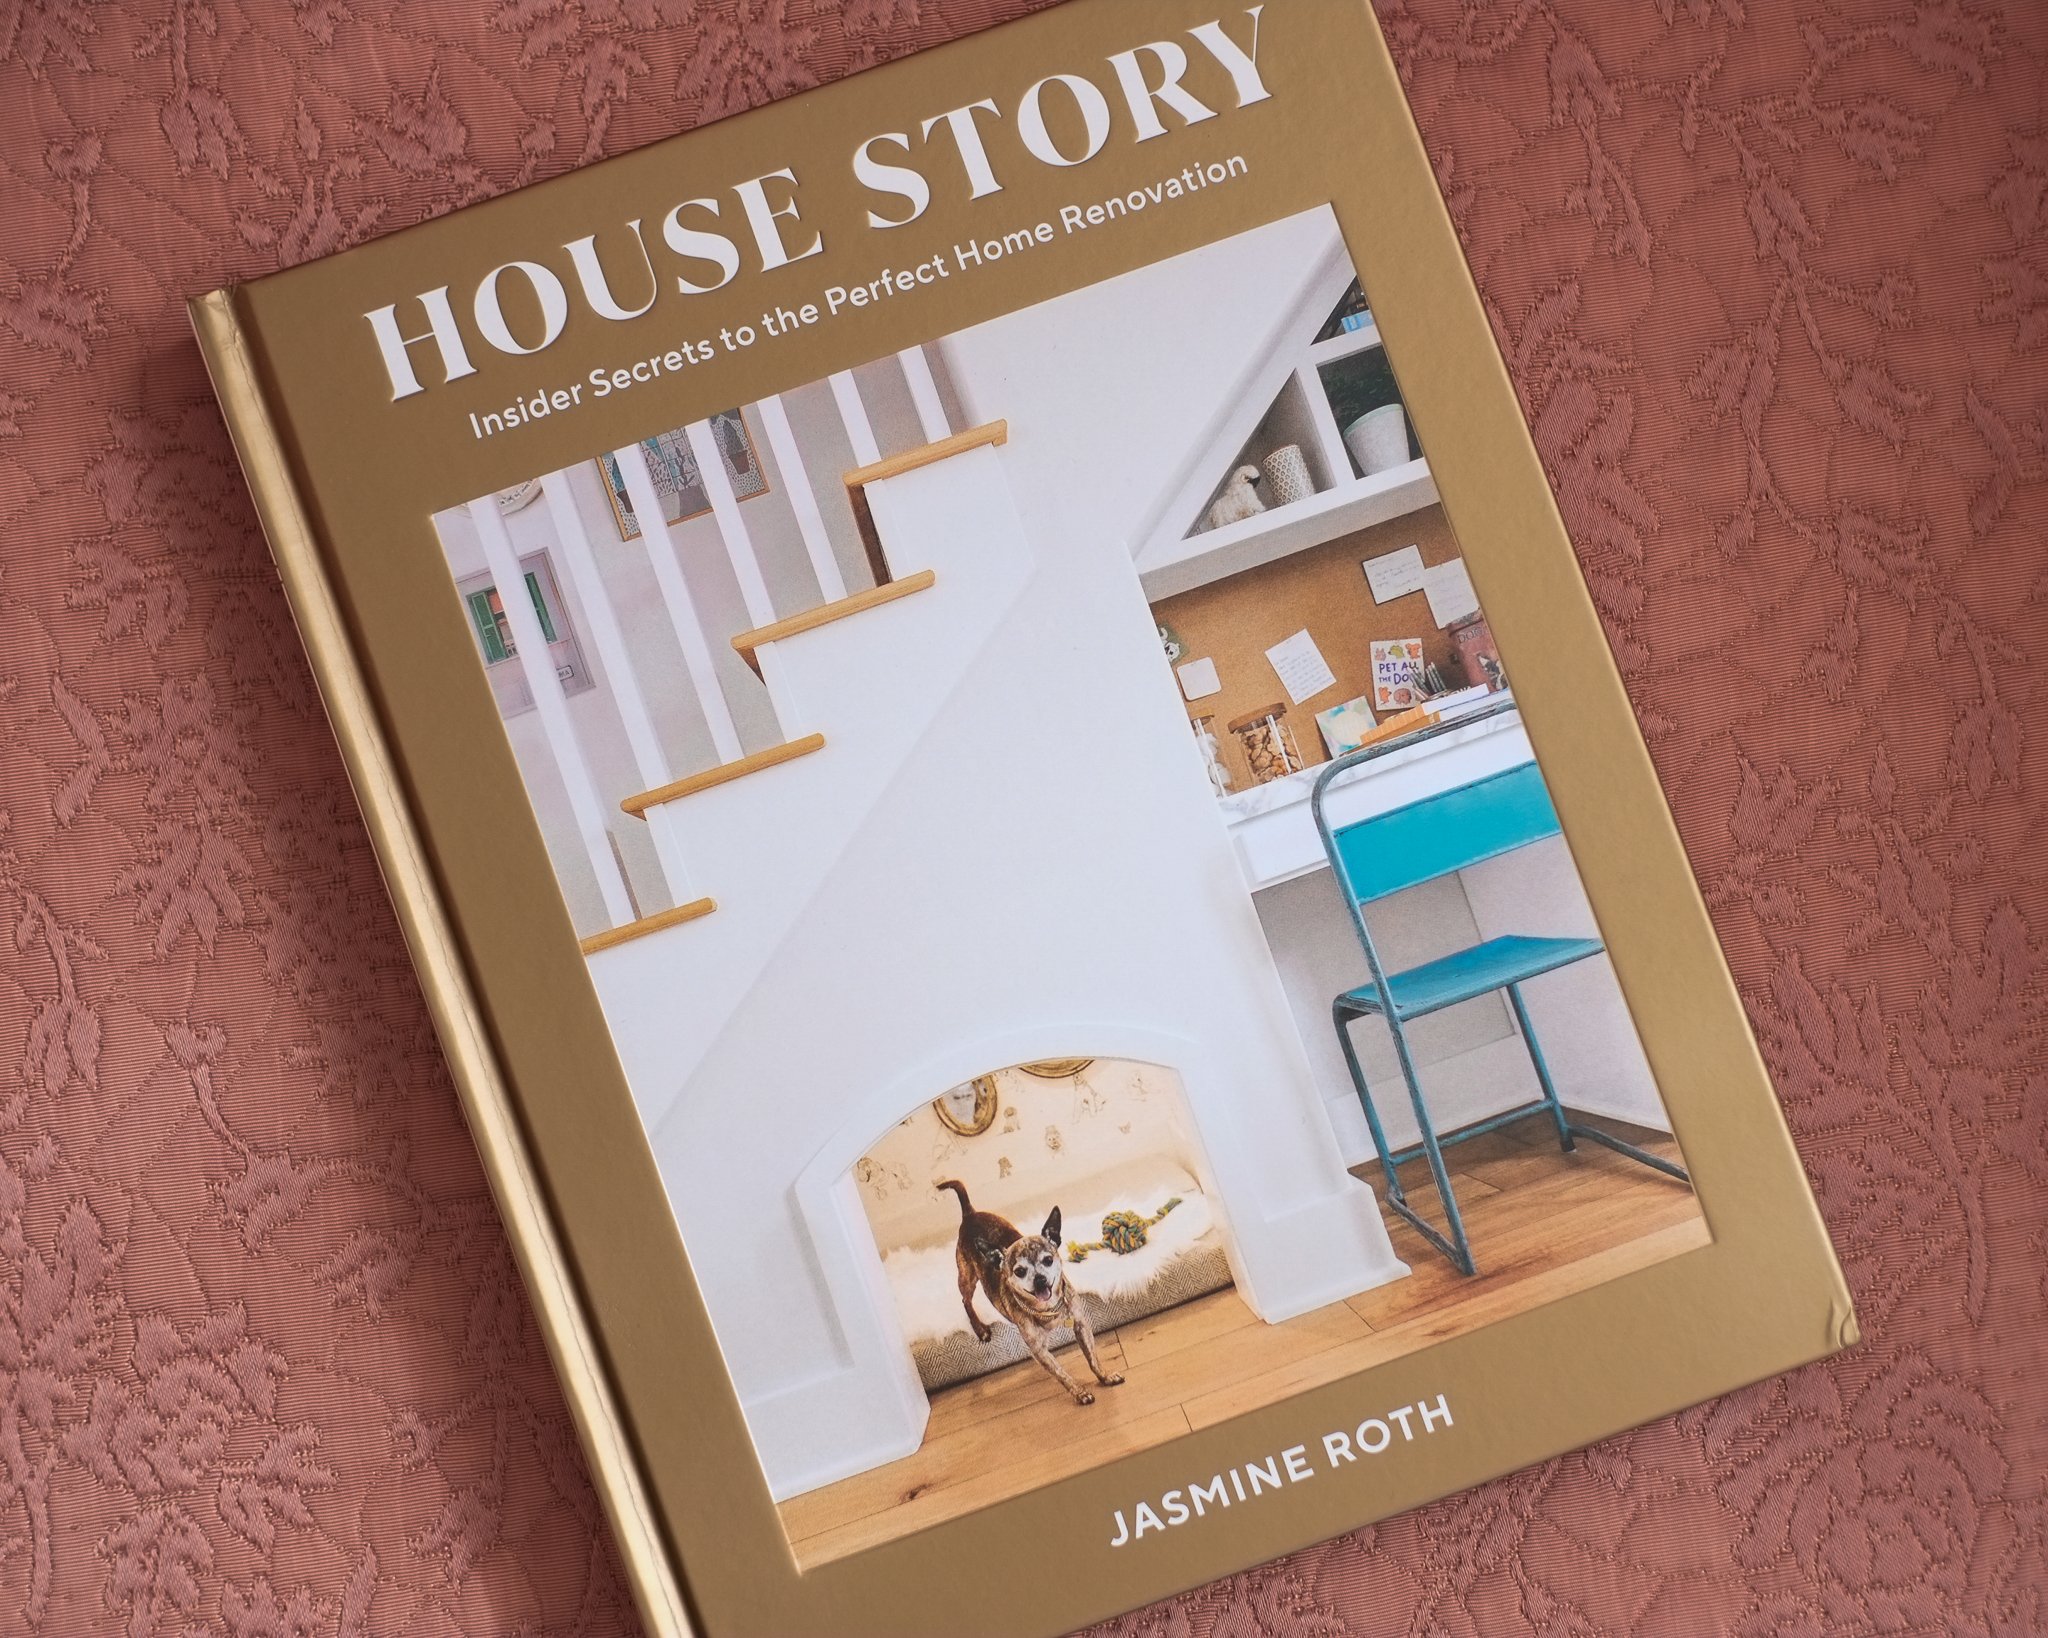 erinellis_house-story-book_jasmine-roth-01.jpg